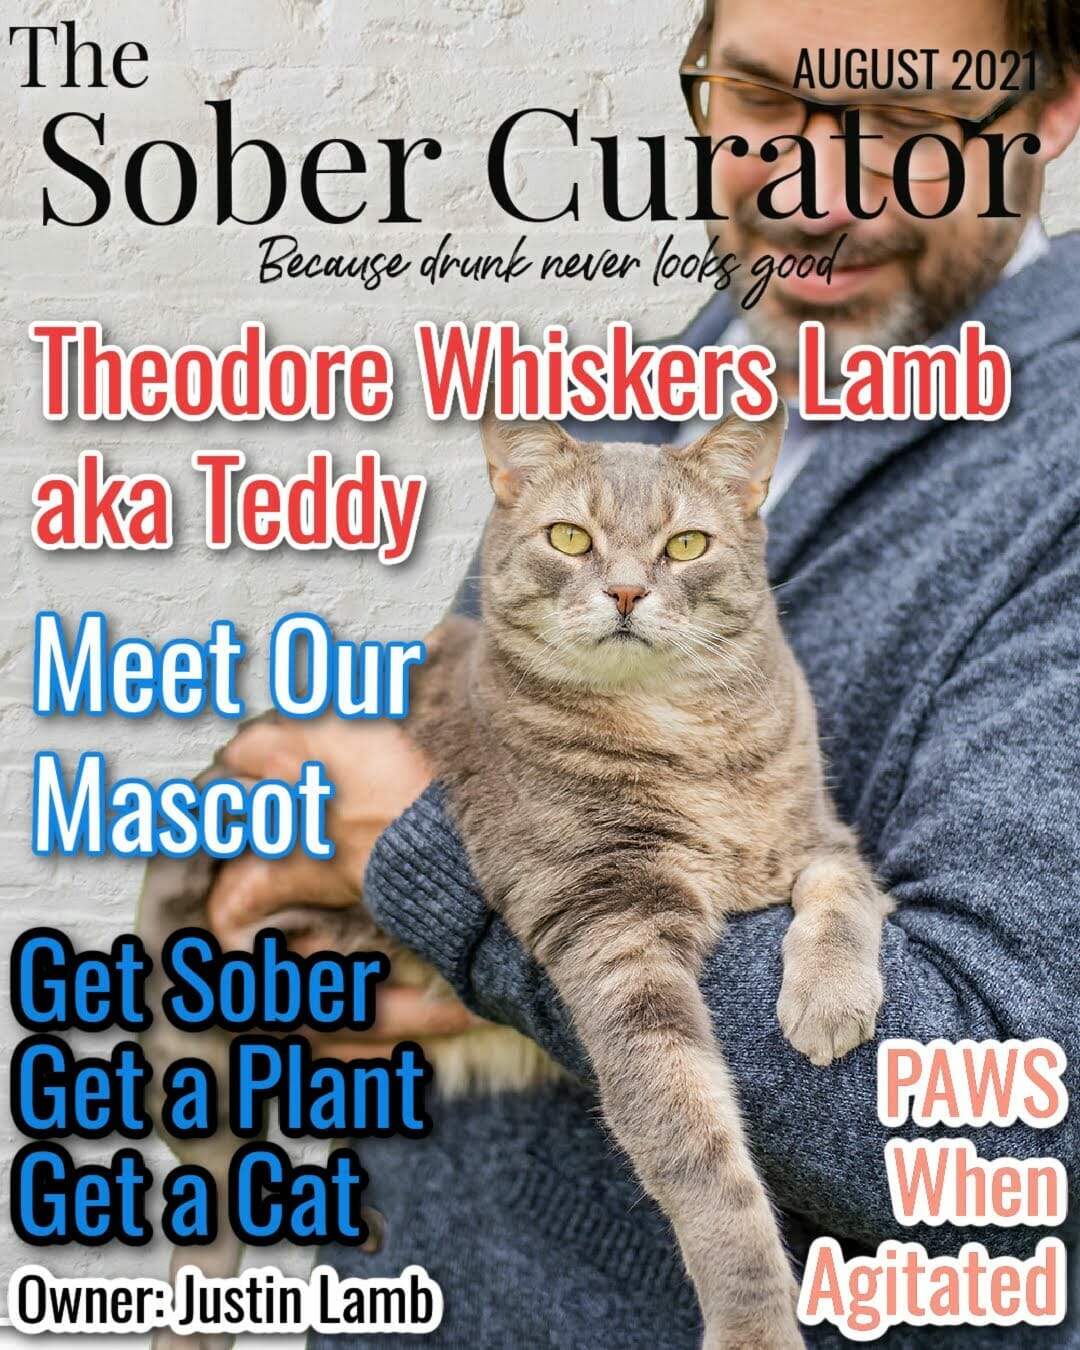 Sober Curator Magazine